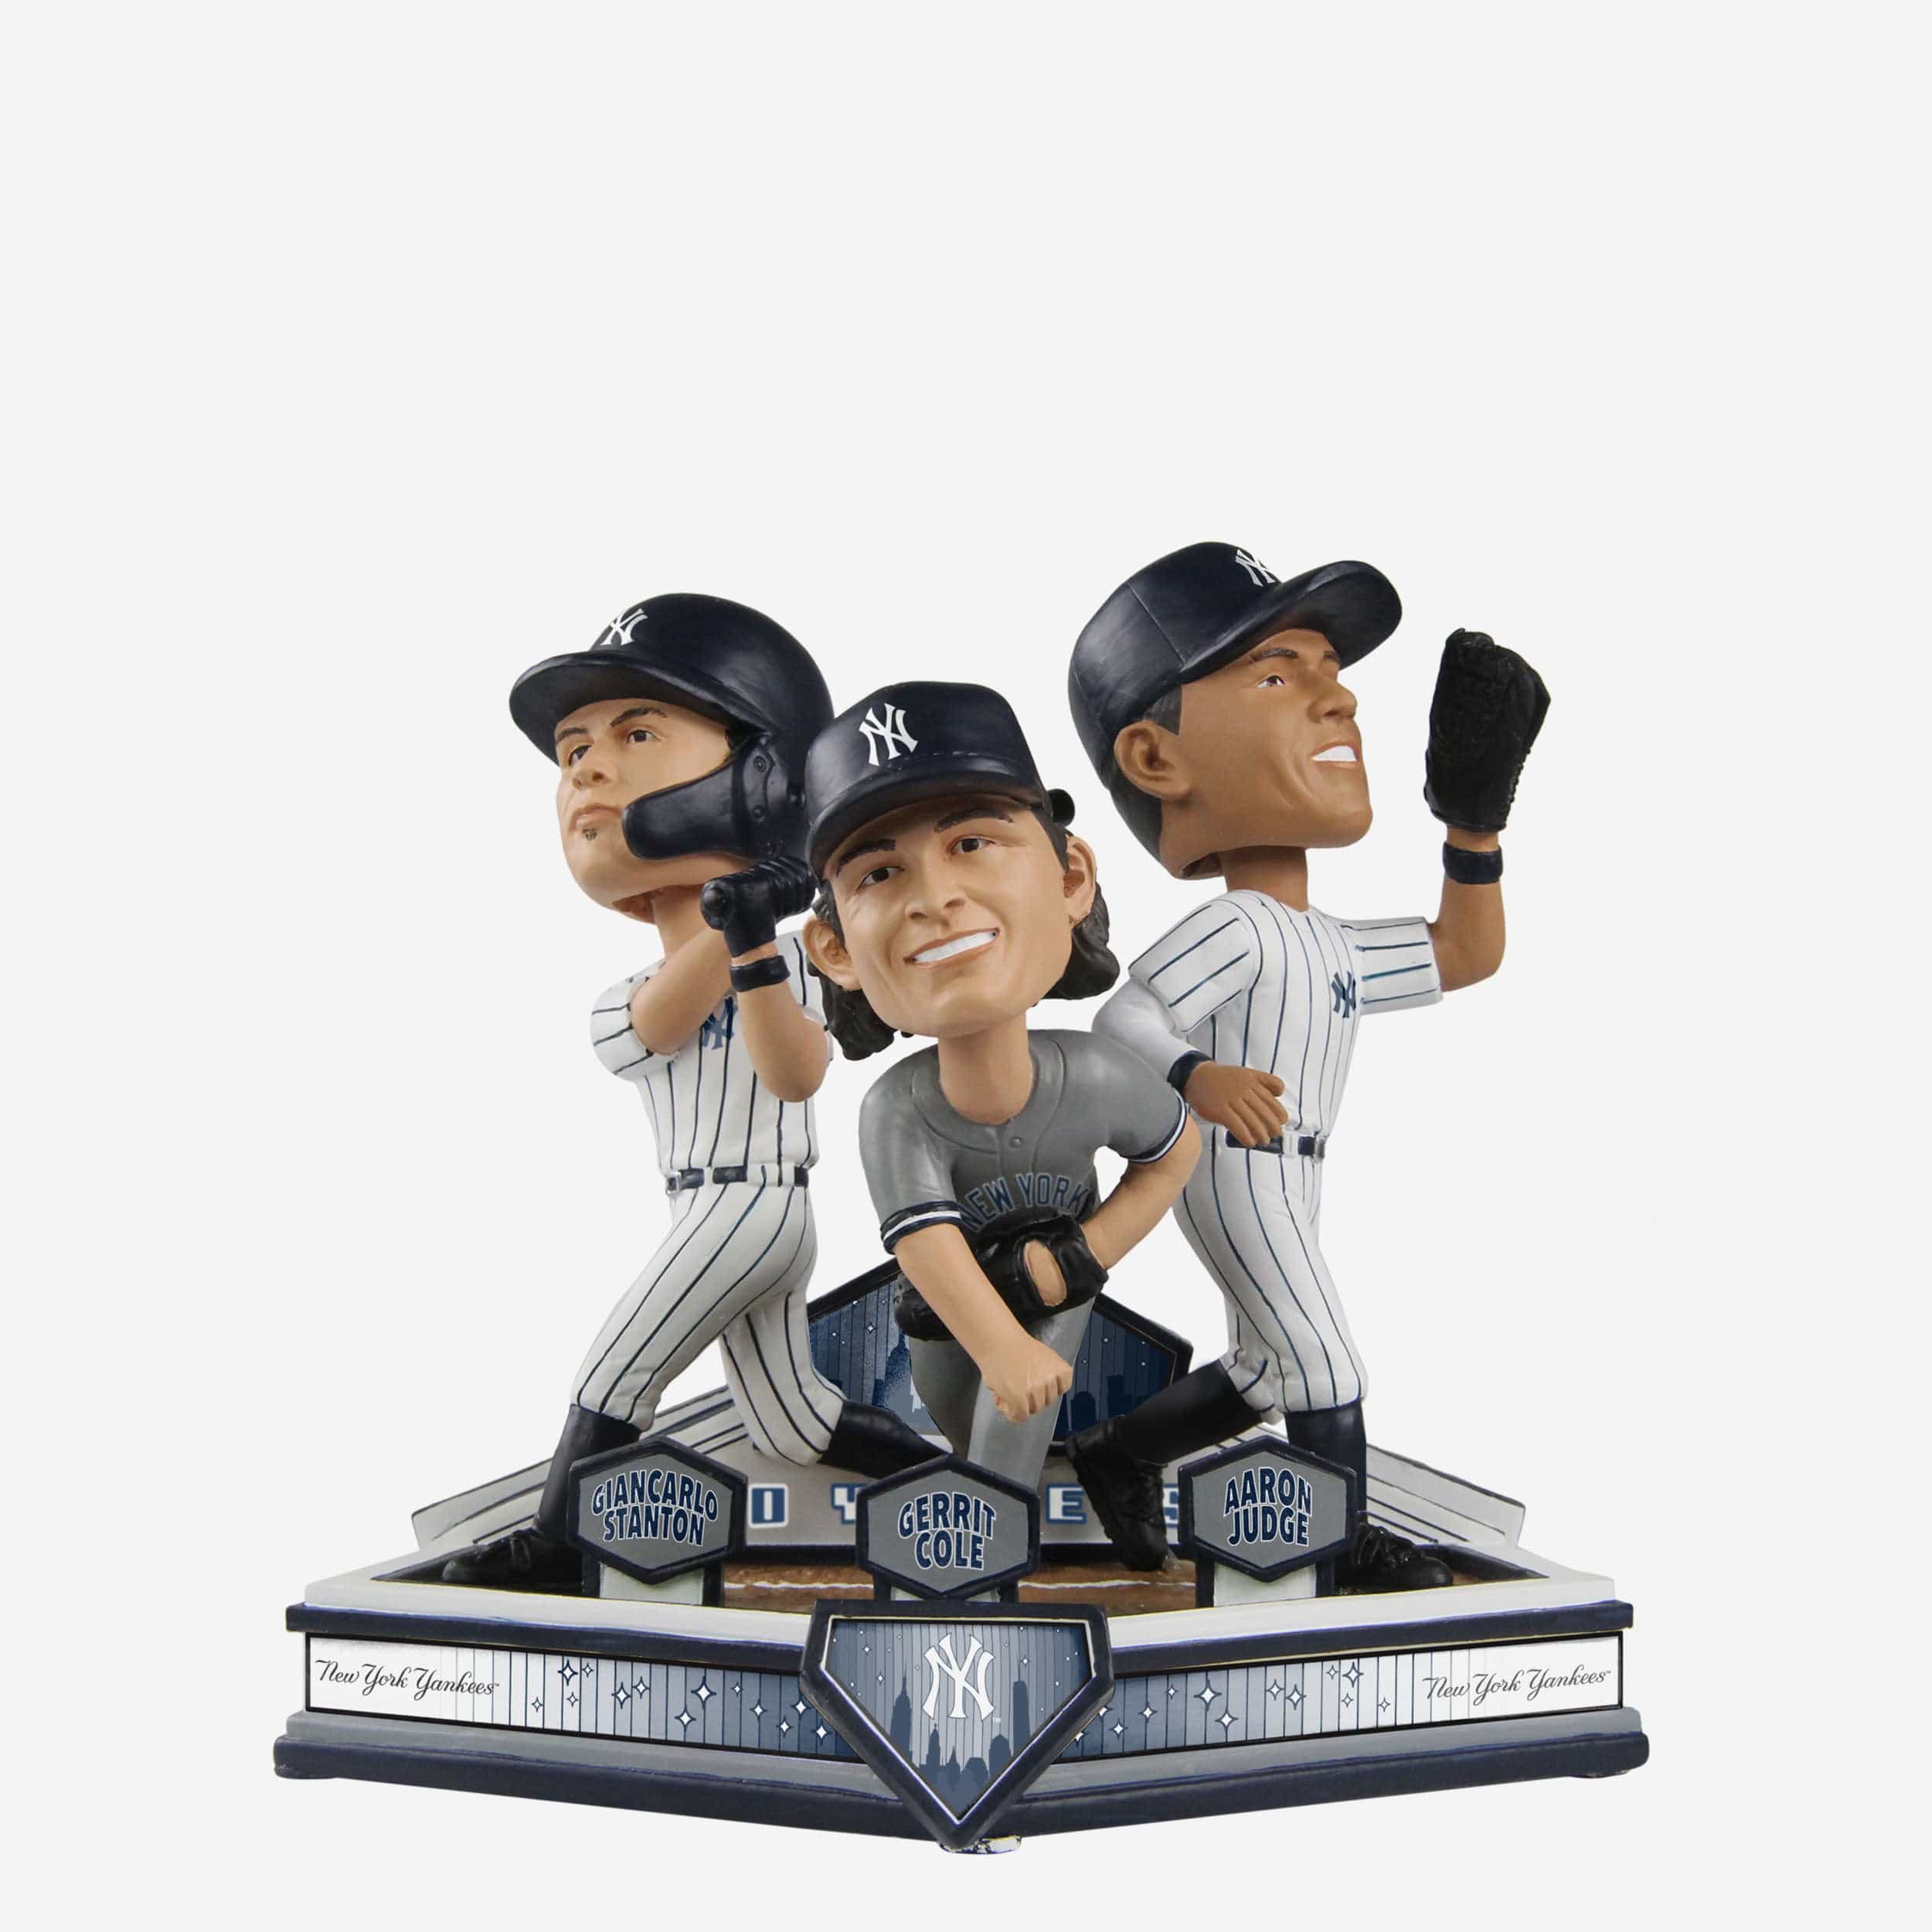 Mens MLB Team Apparel New York Yankees GERRIT COLE Baseball Shirt NAVY